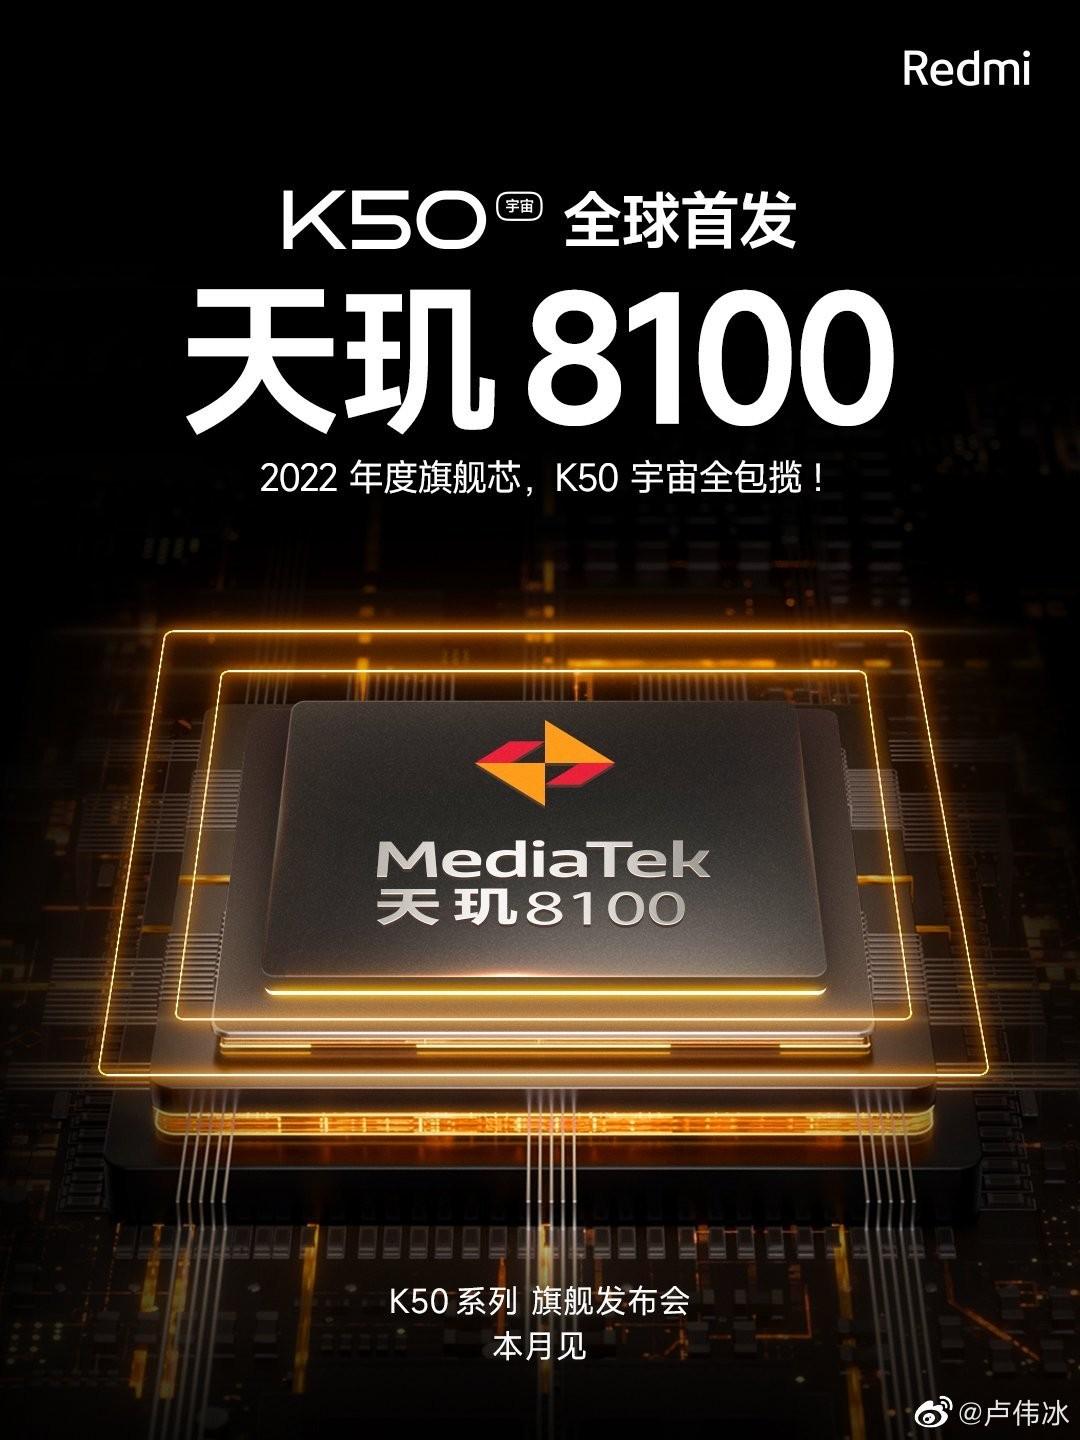 MWC 2022: Redmi K50 Pro, телефон OnePlus и Oppo K10 будут поставляться с новыми чипами Dimensity 8000 (gsmarena 001 21)